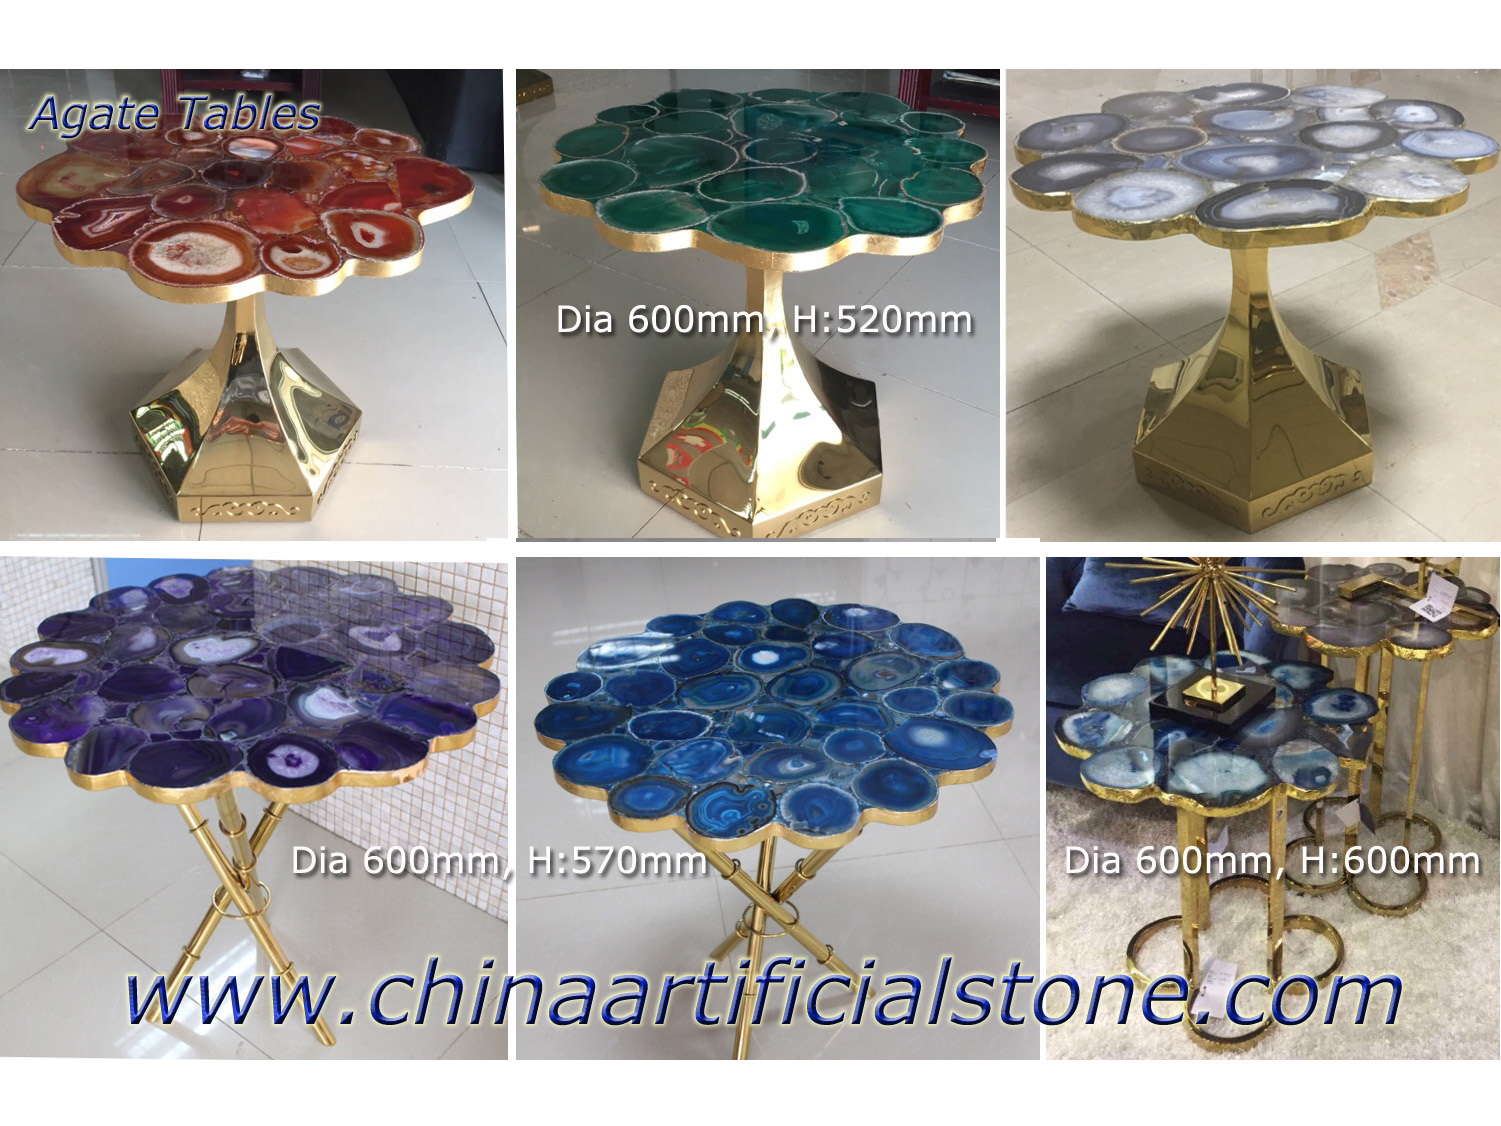 Tampos de mesa de centro laterais de ágata com pedras preciosas
